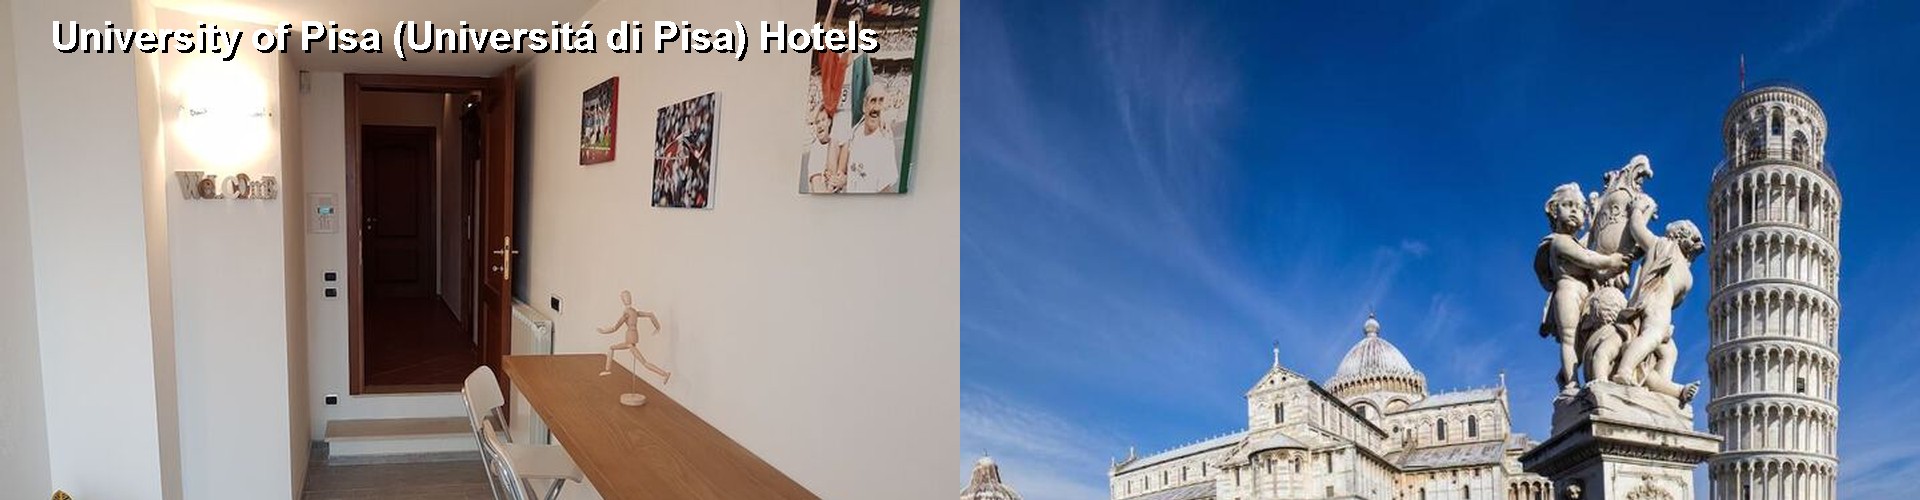 5 Best Hotels near University of Pisa (Universitá di Pisa)